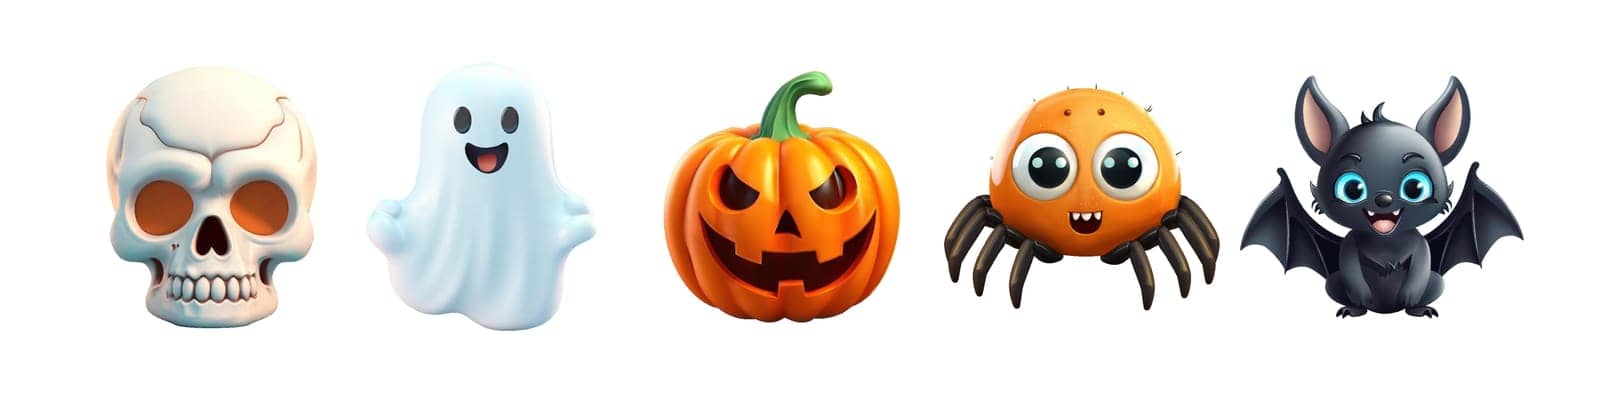 Halloween 3D spooky elements. Vector Illustration EPS10 by yganko